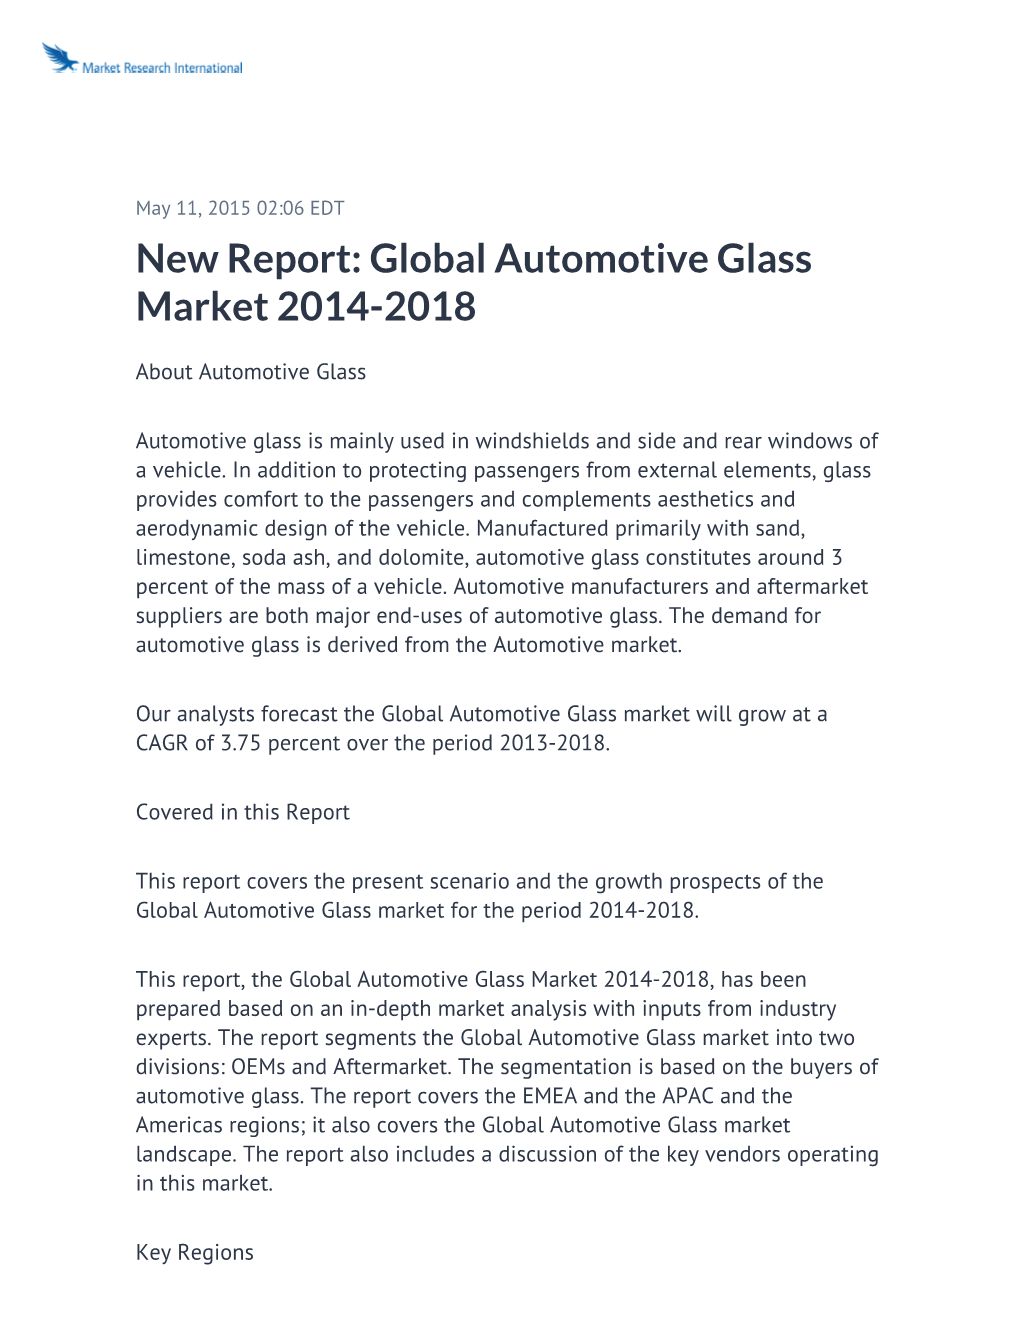 New Report: Global Automotive Glass Market 2014-2018